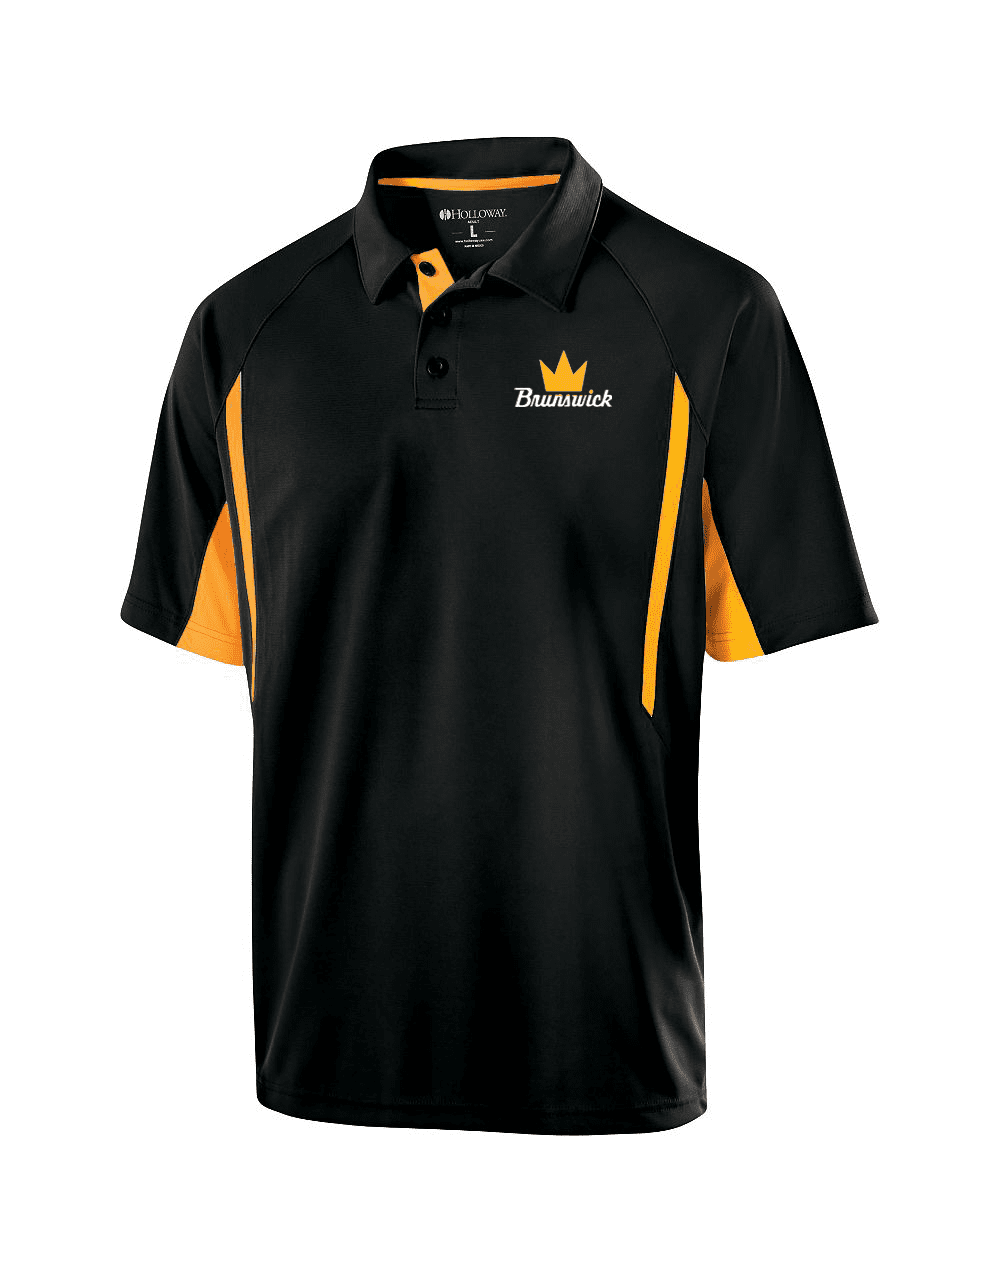 Track Men's Phenom Performance Polo Bowling Shirt Dri-Fit Argyle Black Yellow 